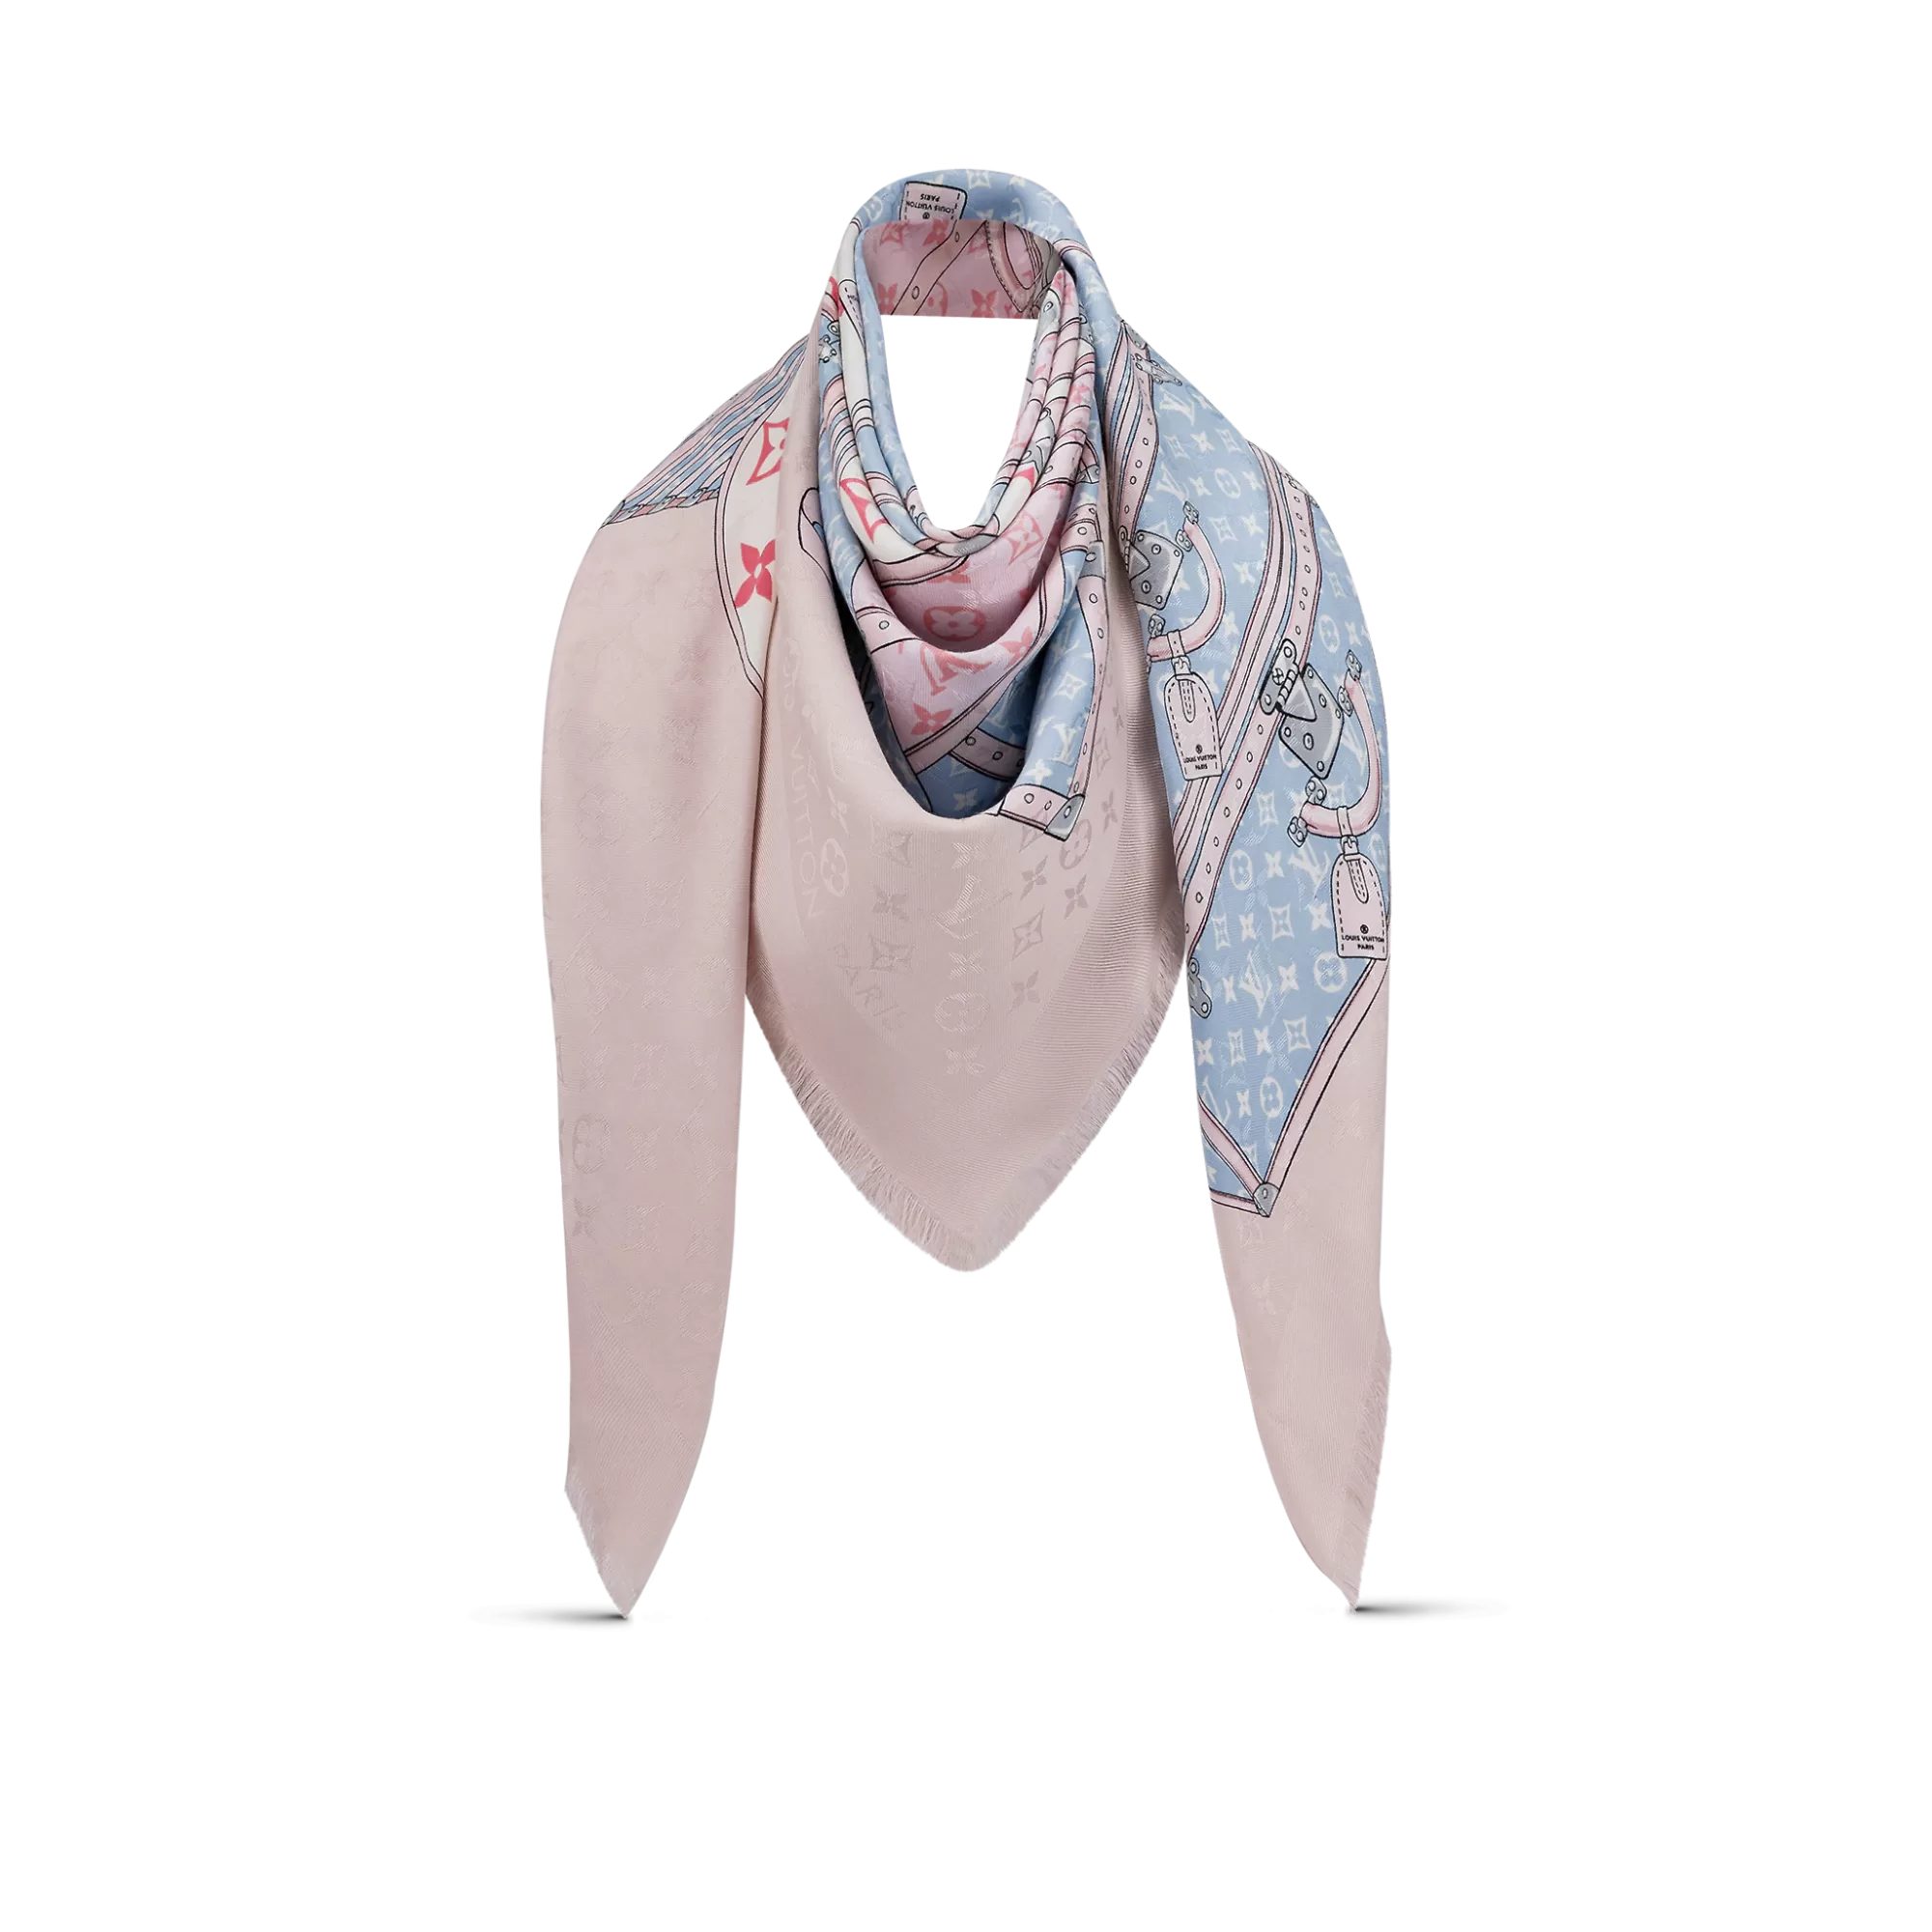 Mimosa Nepal - Louis Vuitton silk scarf for summer